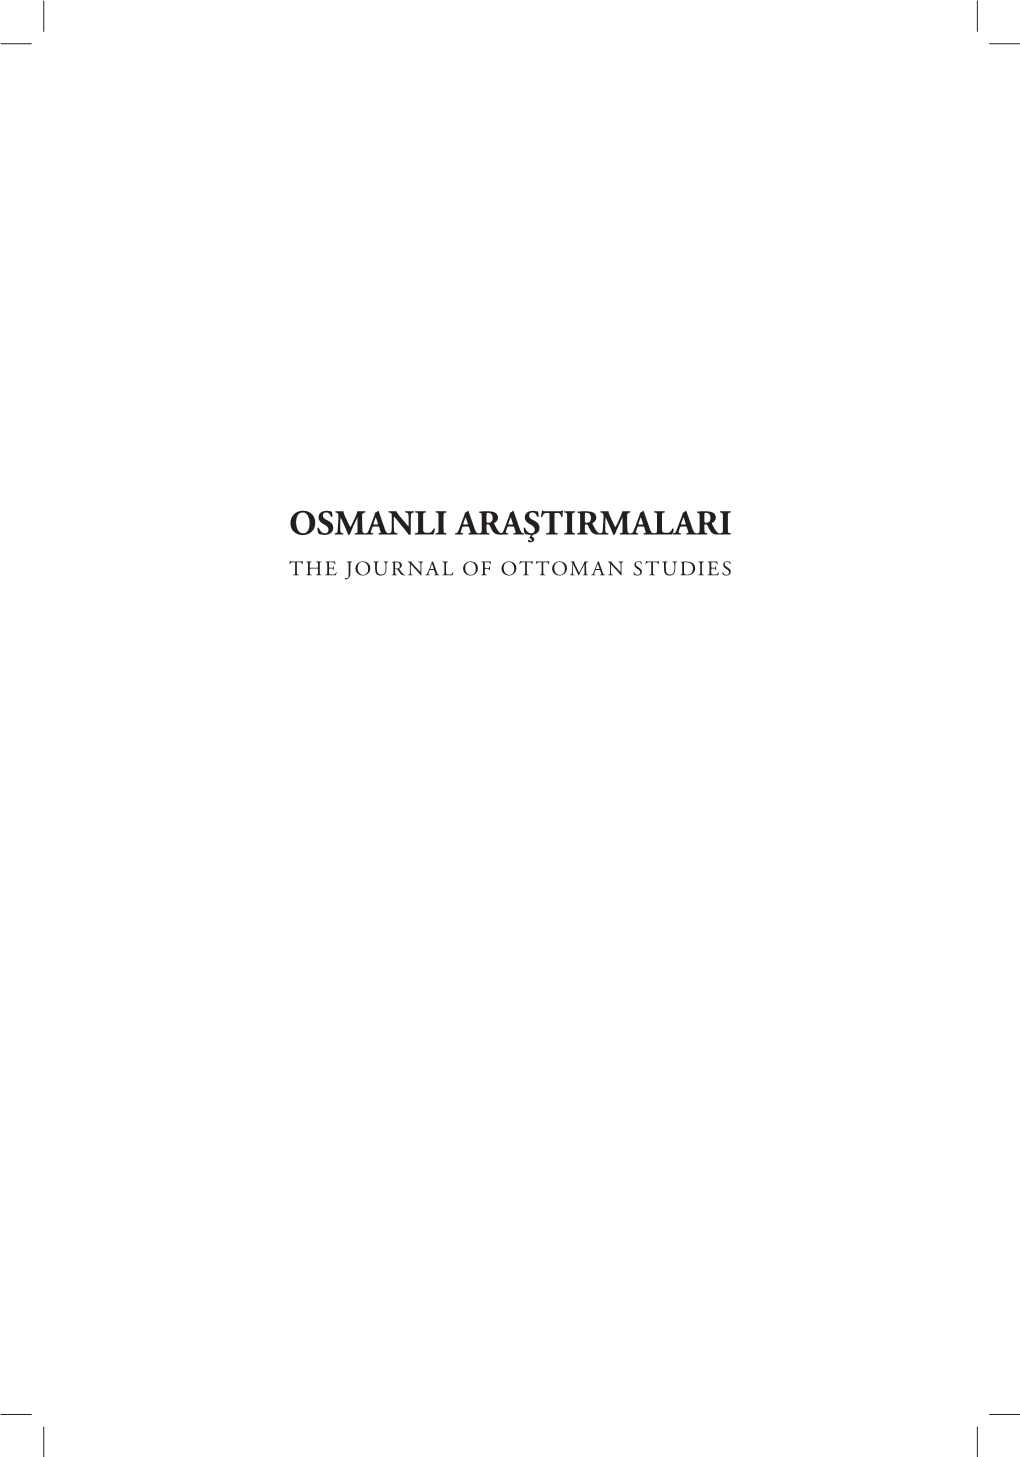 Osmanli Araştirmalari the Journal of Ottoman Studies